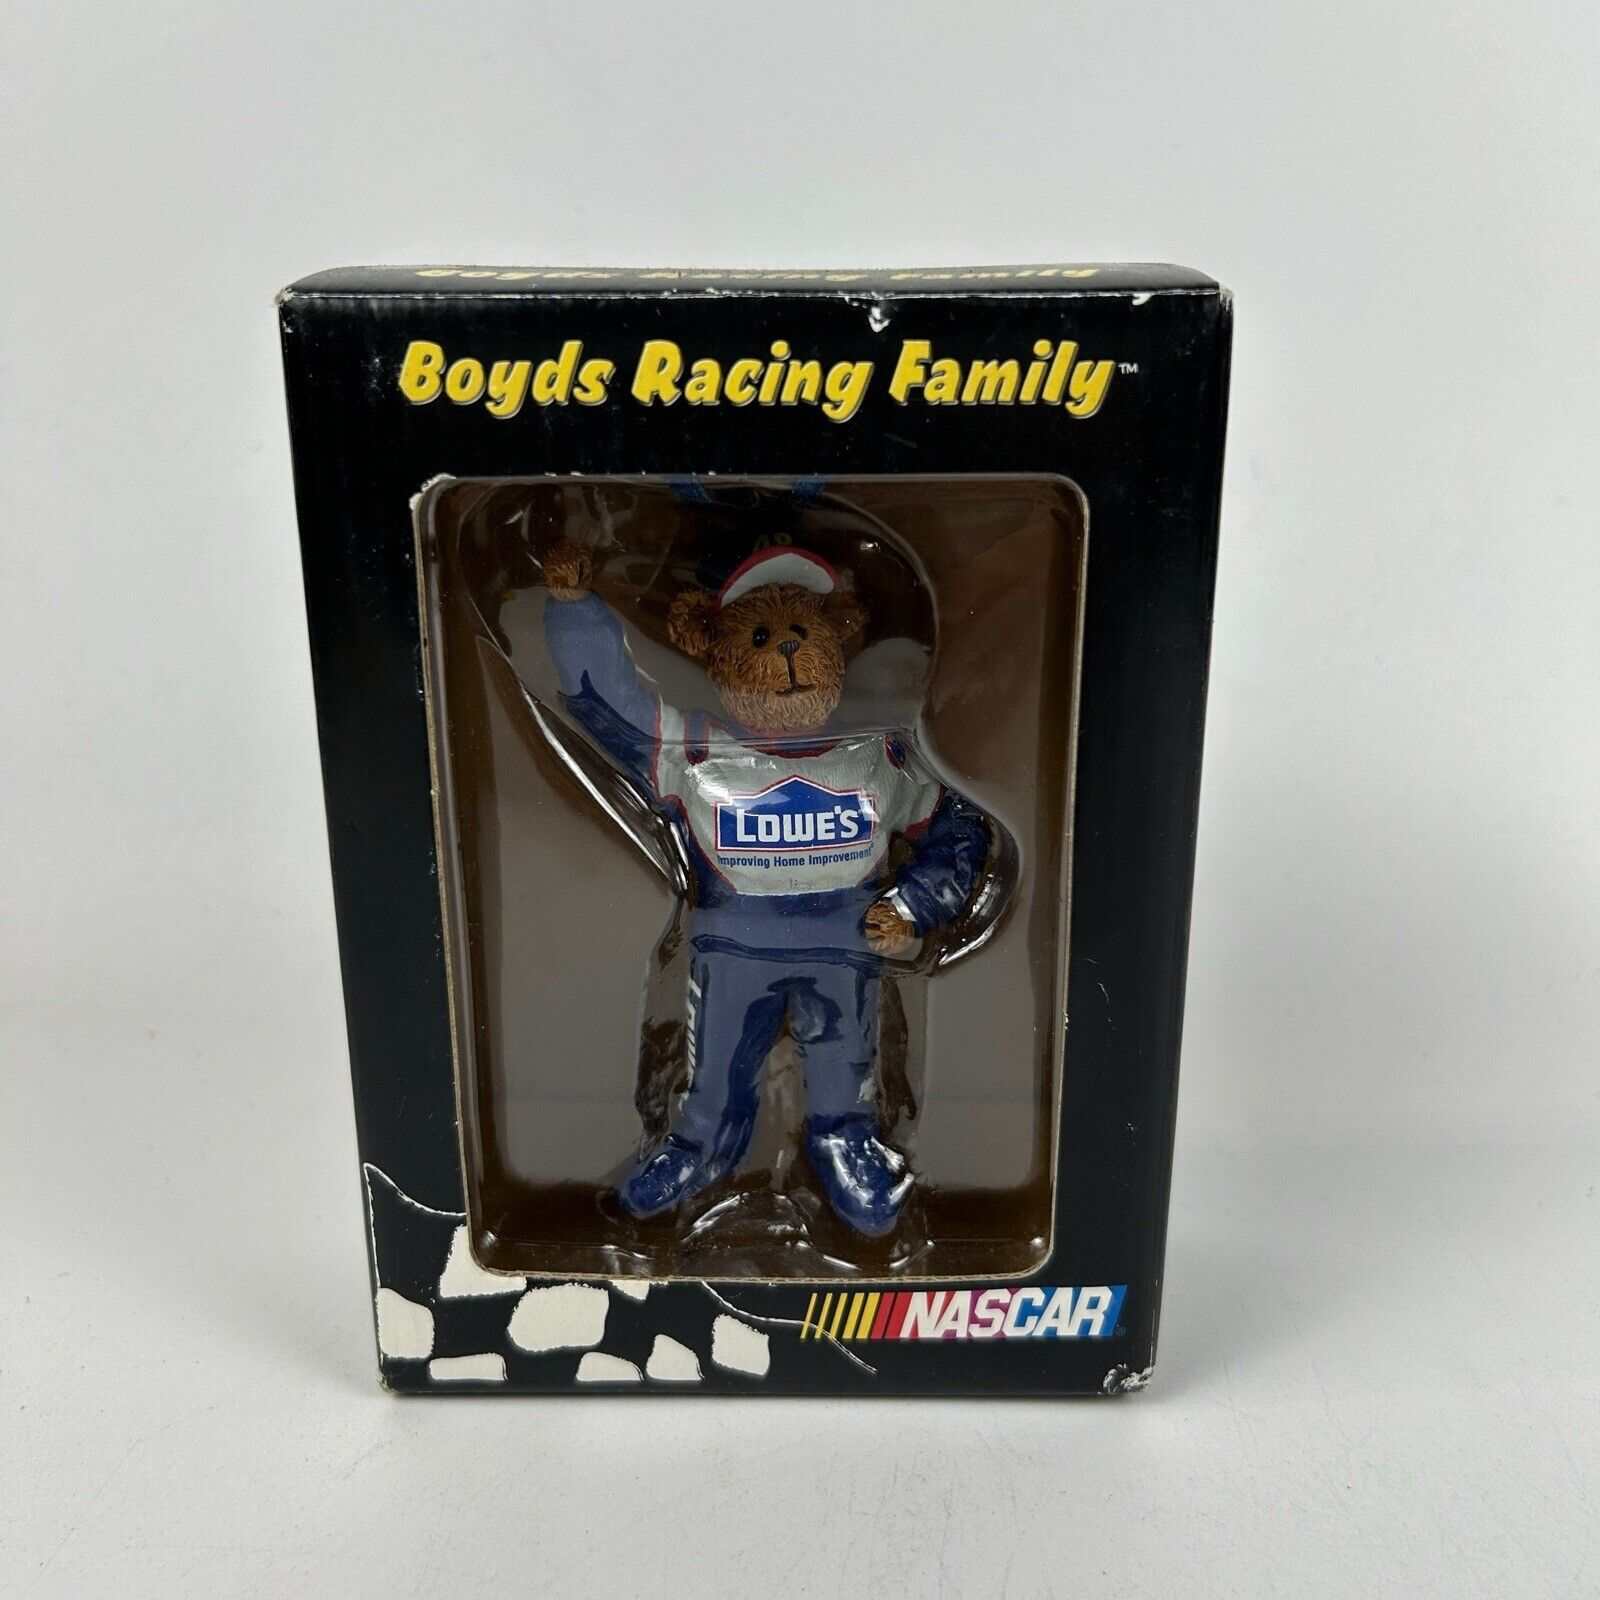 2004 RARE Boyds Racing Family Bearstone NASCAR Ornament - Jimmie Johnson LOWES